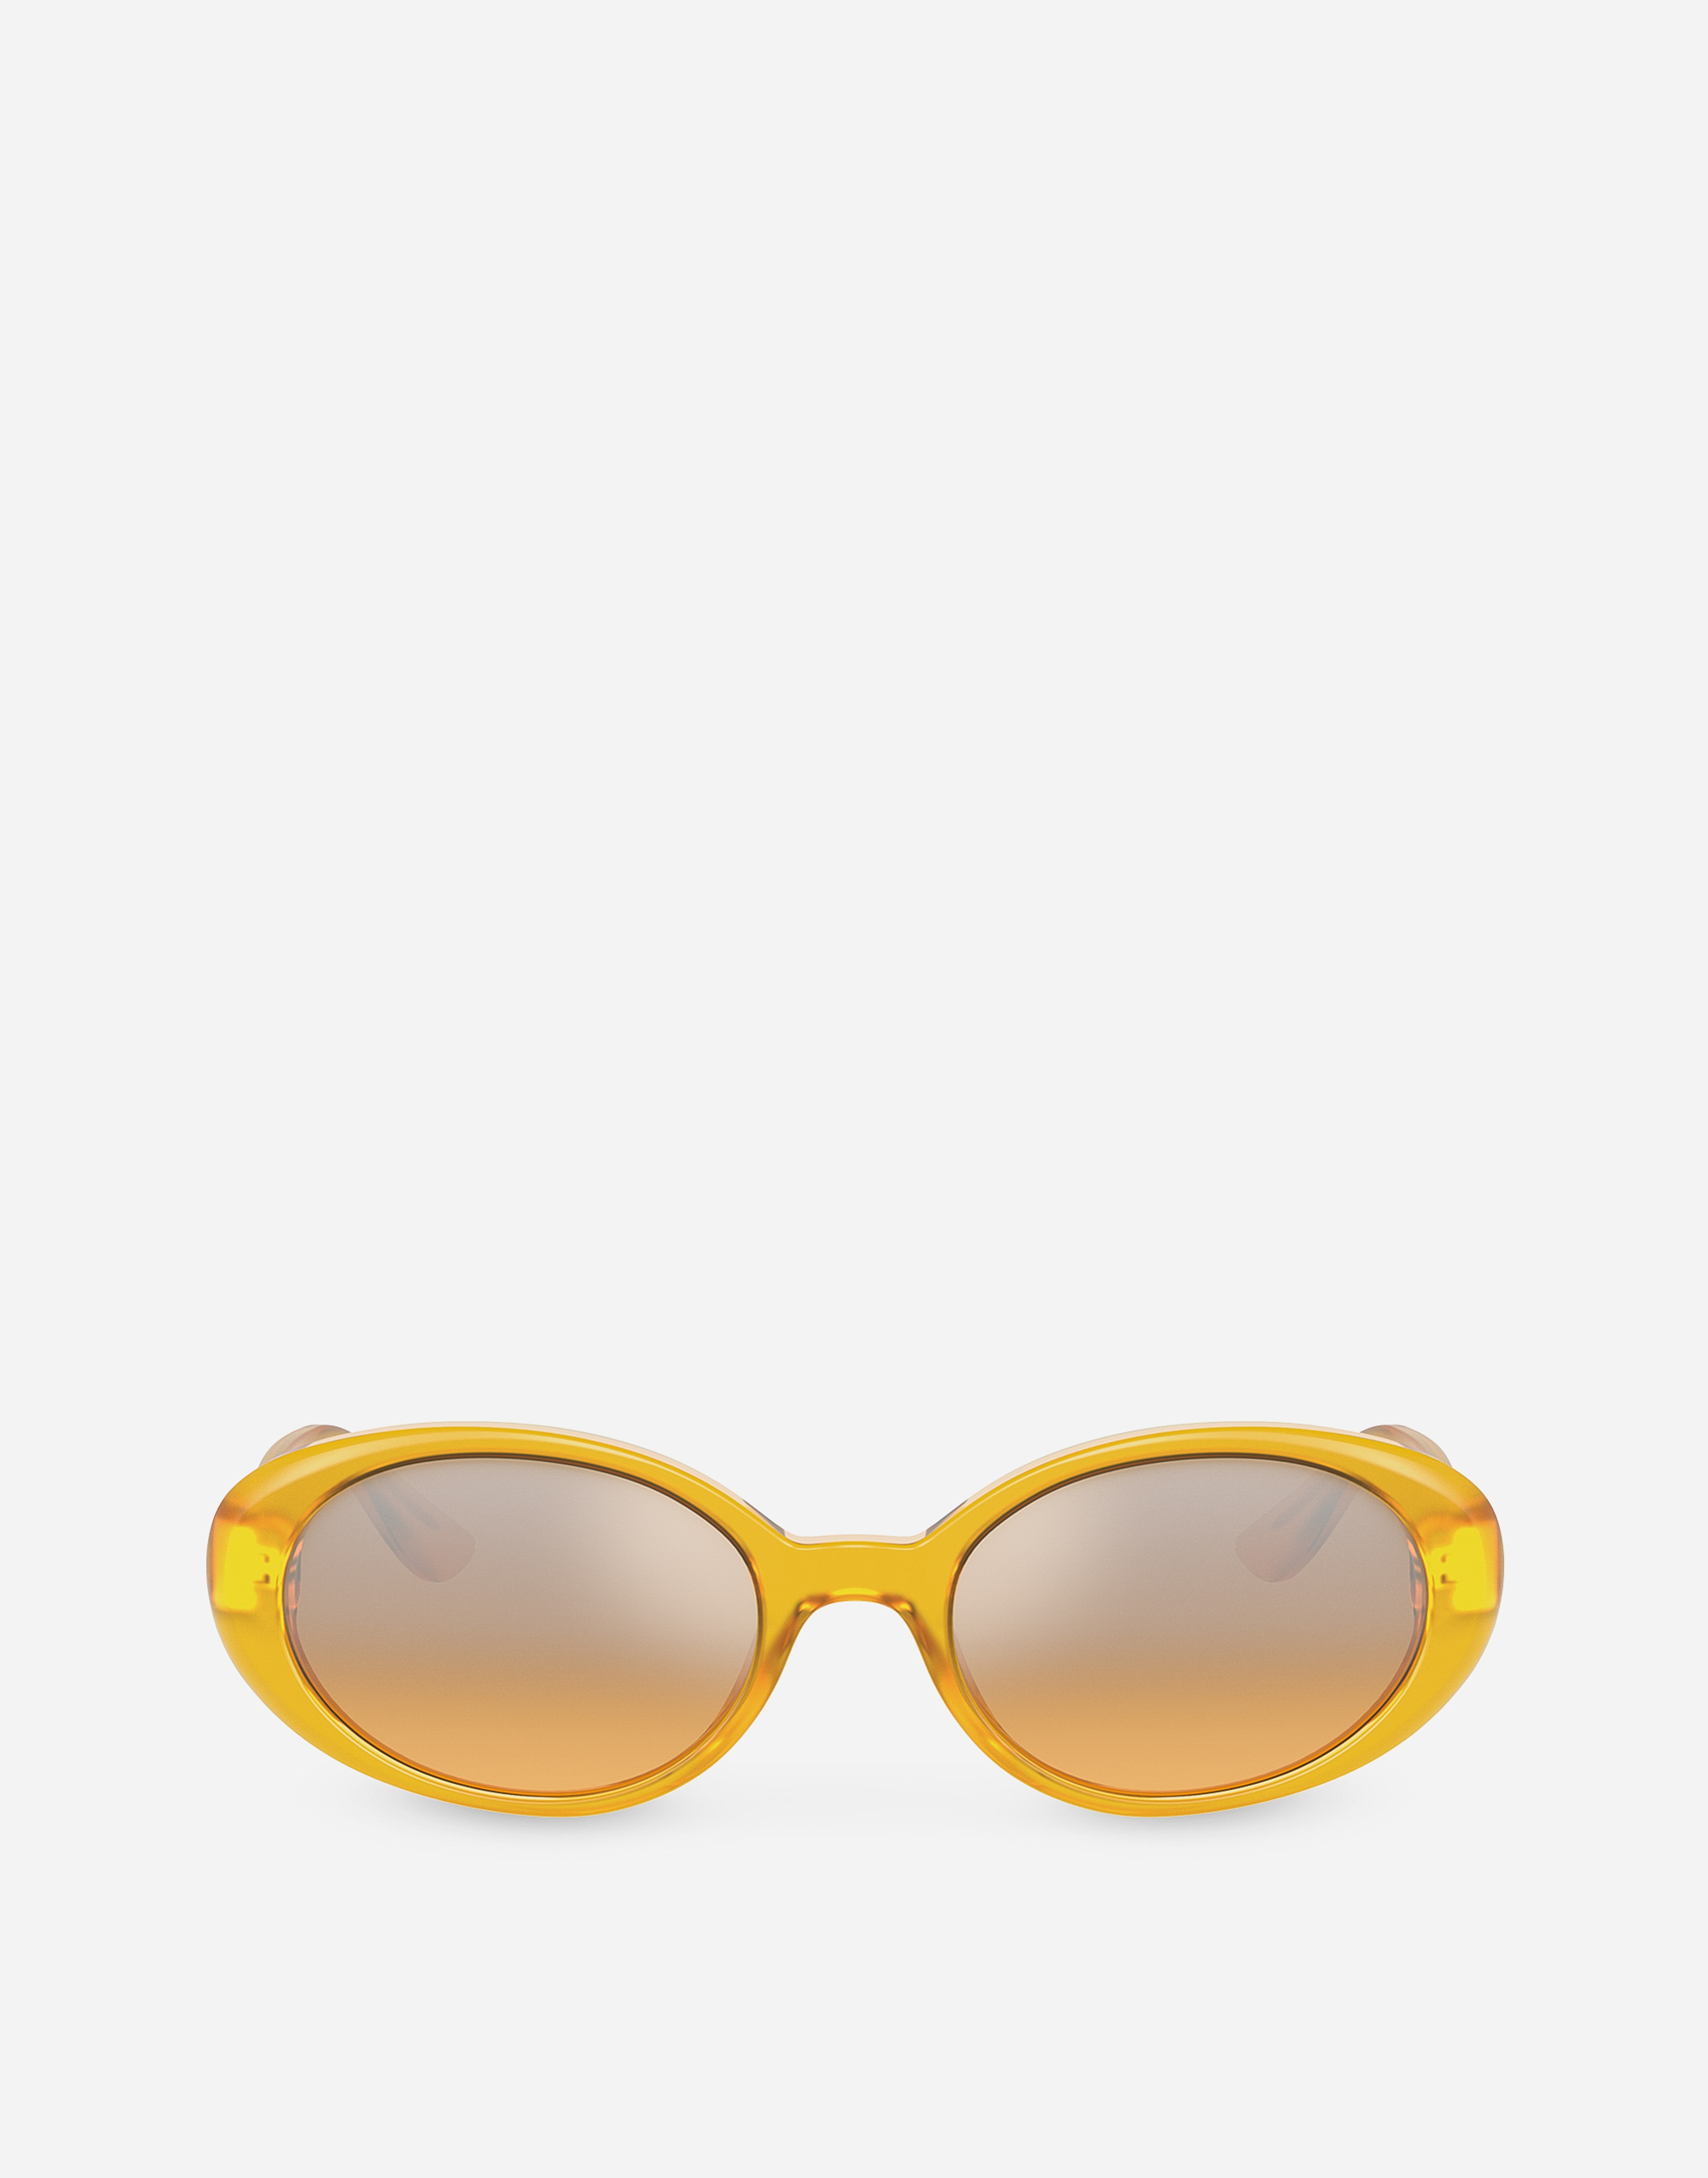 Dolce & Gabbana Re-edition Sunglasses In Opaline Yellow